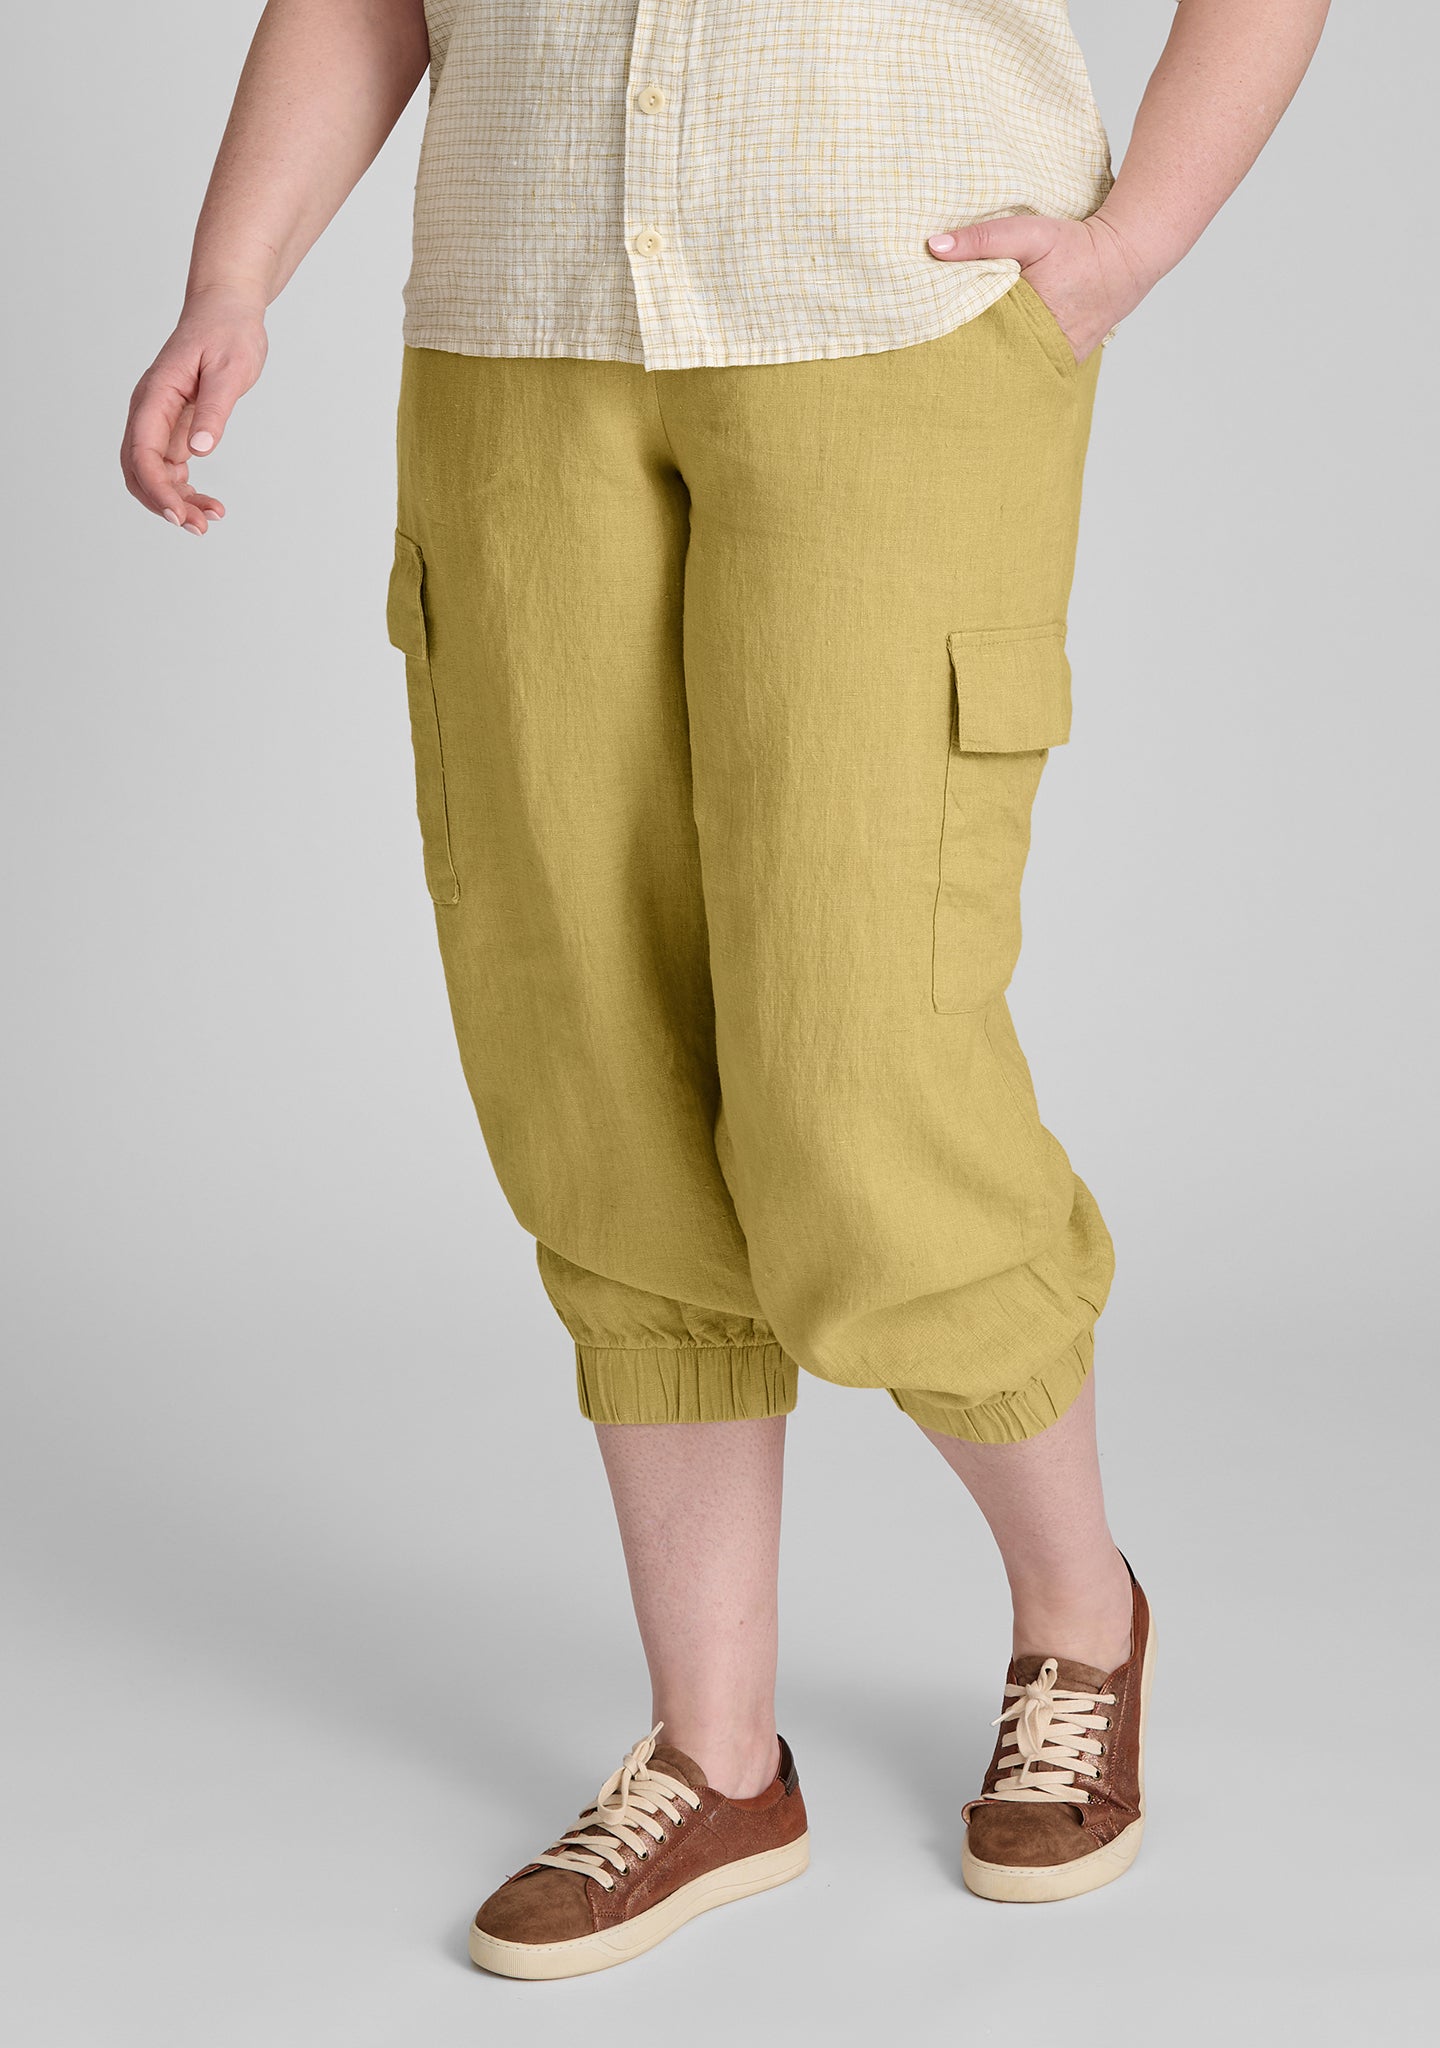 nifty pant linen drawstring pants yellow